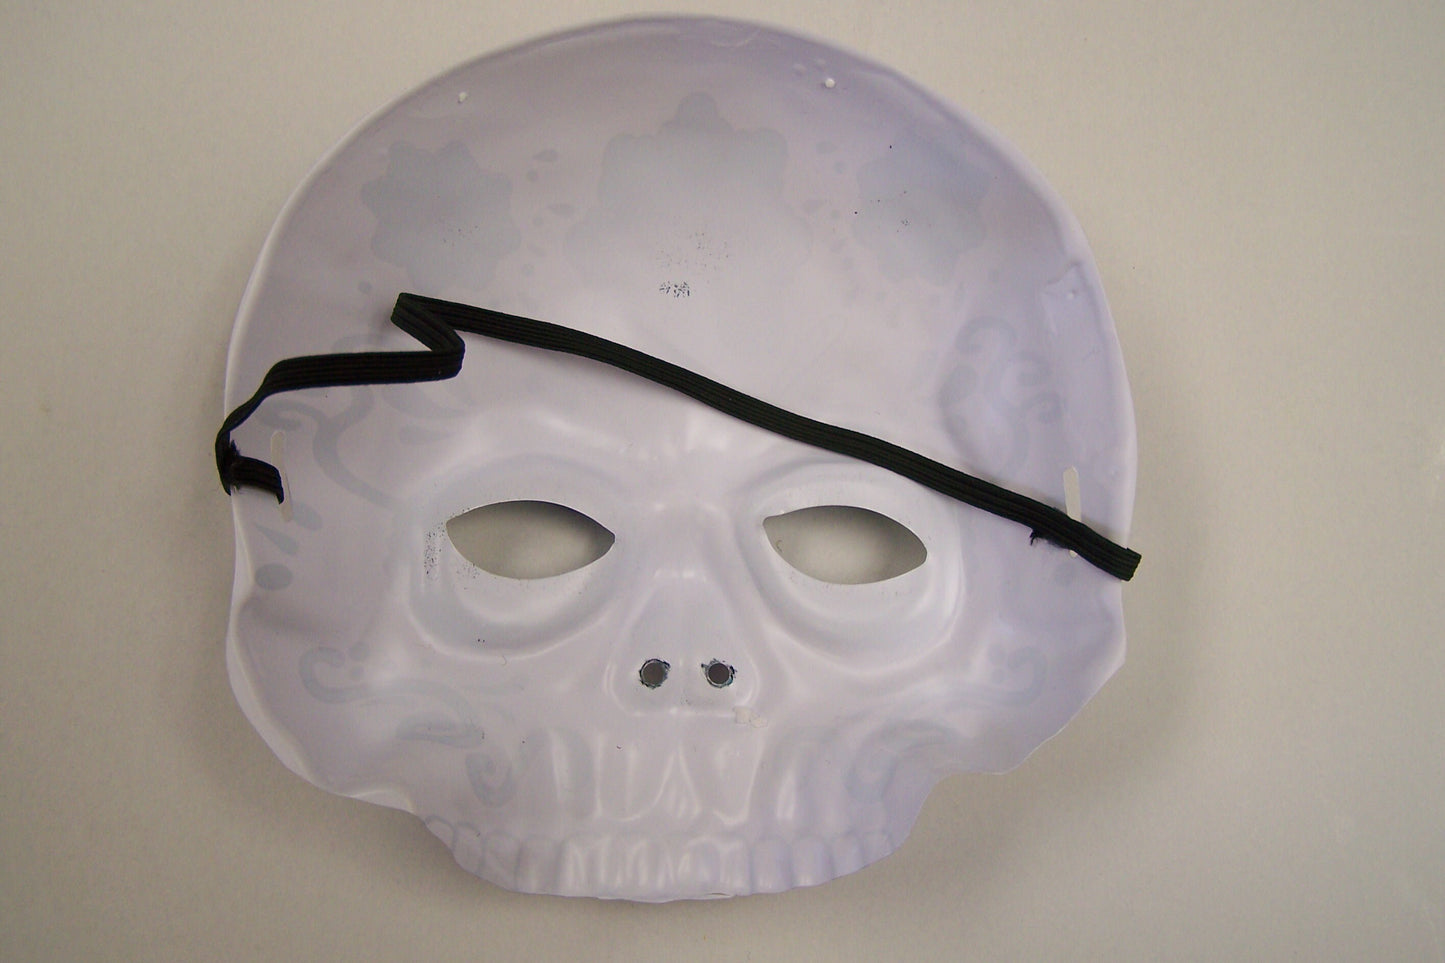 Day of the Dead Sugar Skull Plastic Halloween Mask - Turquoise - Dia de los Muertos